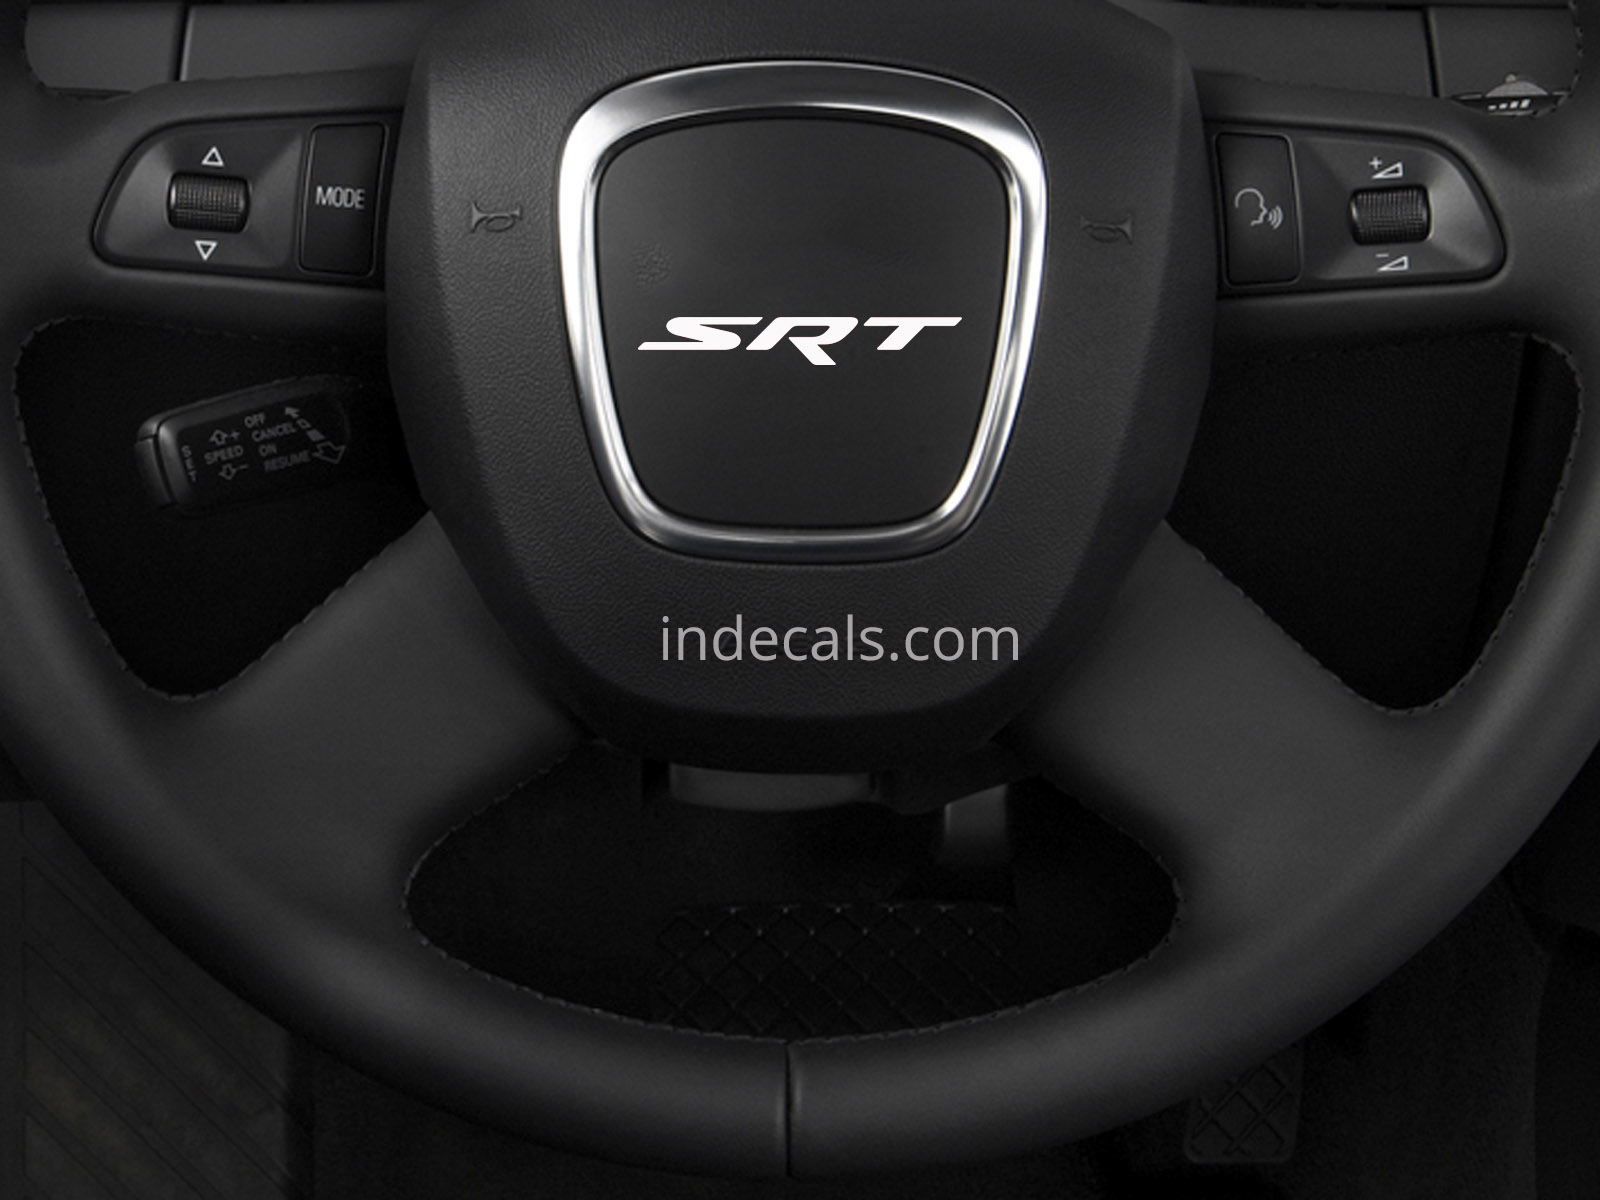 3 x Dodge SRT Stickers for Steering Wheel - White